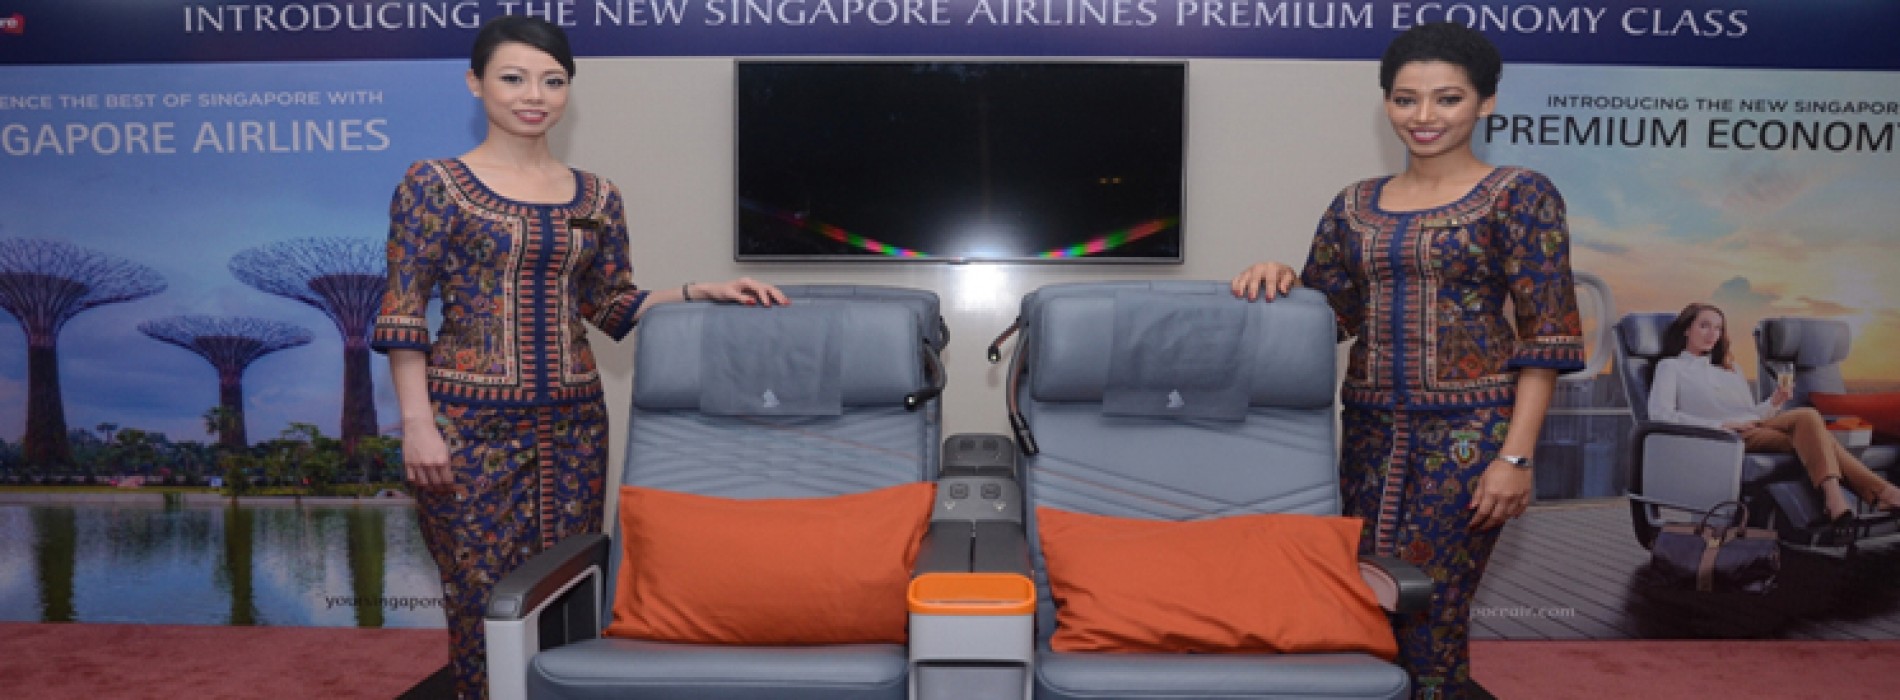 Singapore Airlines unveils new Premium Economy Class Experience in India